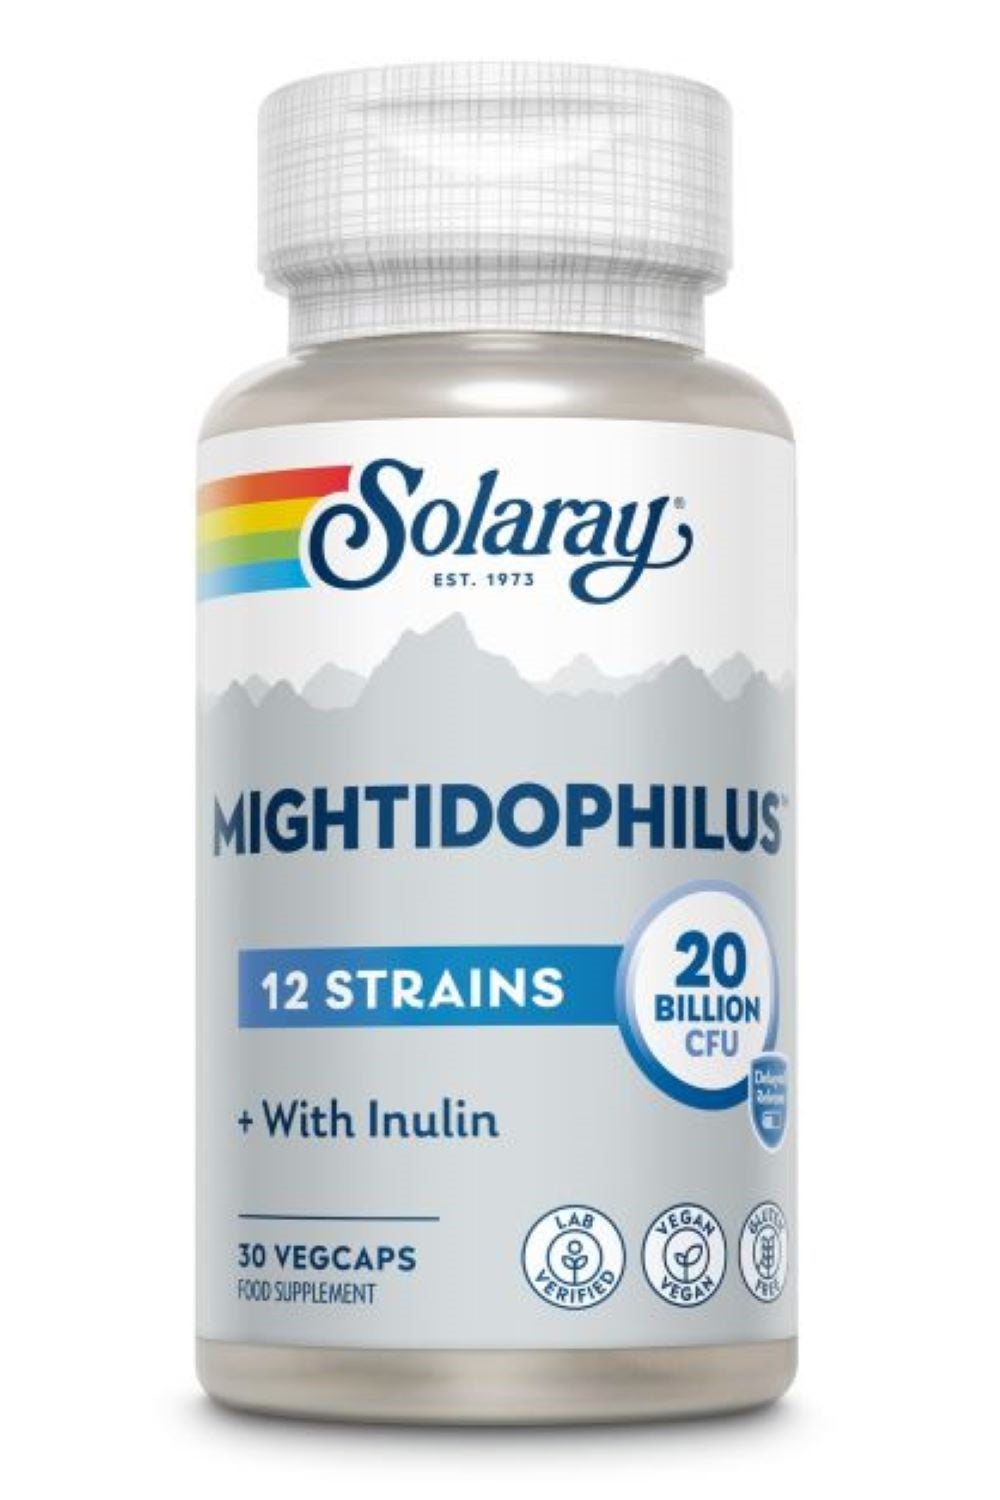 Solaray mightidophilus 12 fórmula de cepa 20 mil millones de ufc - 30 vegicaps